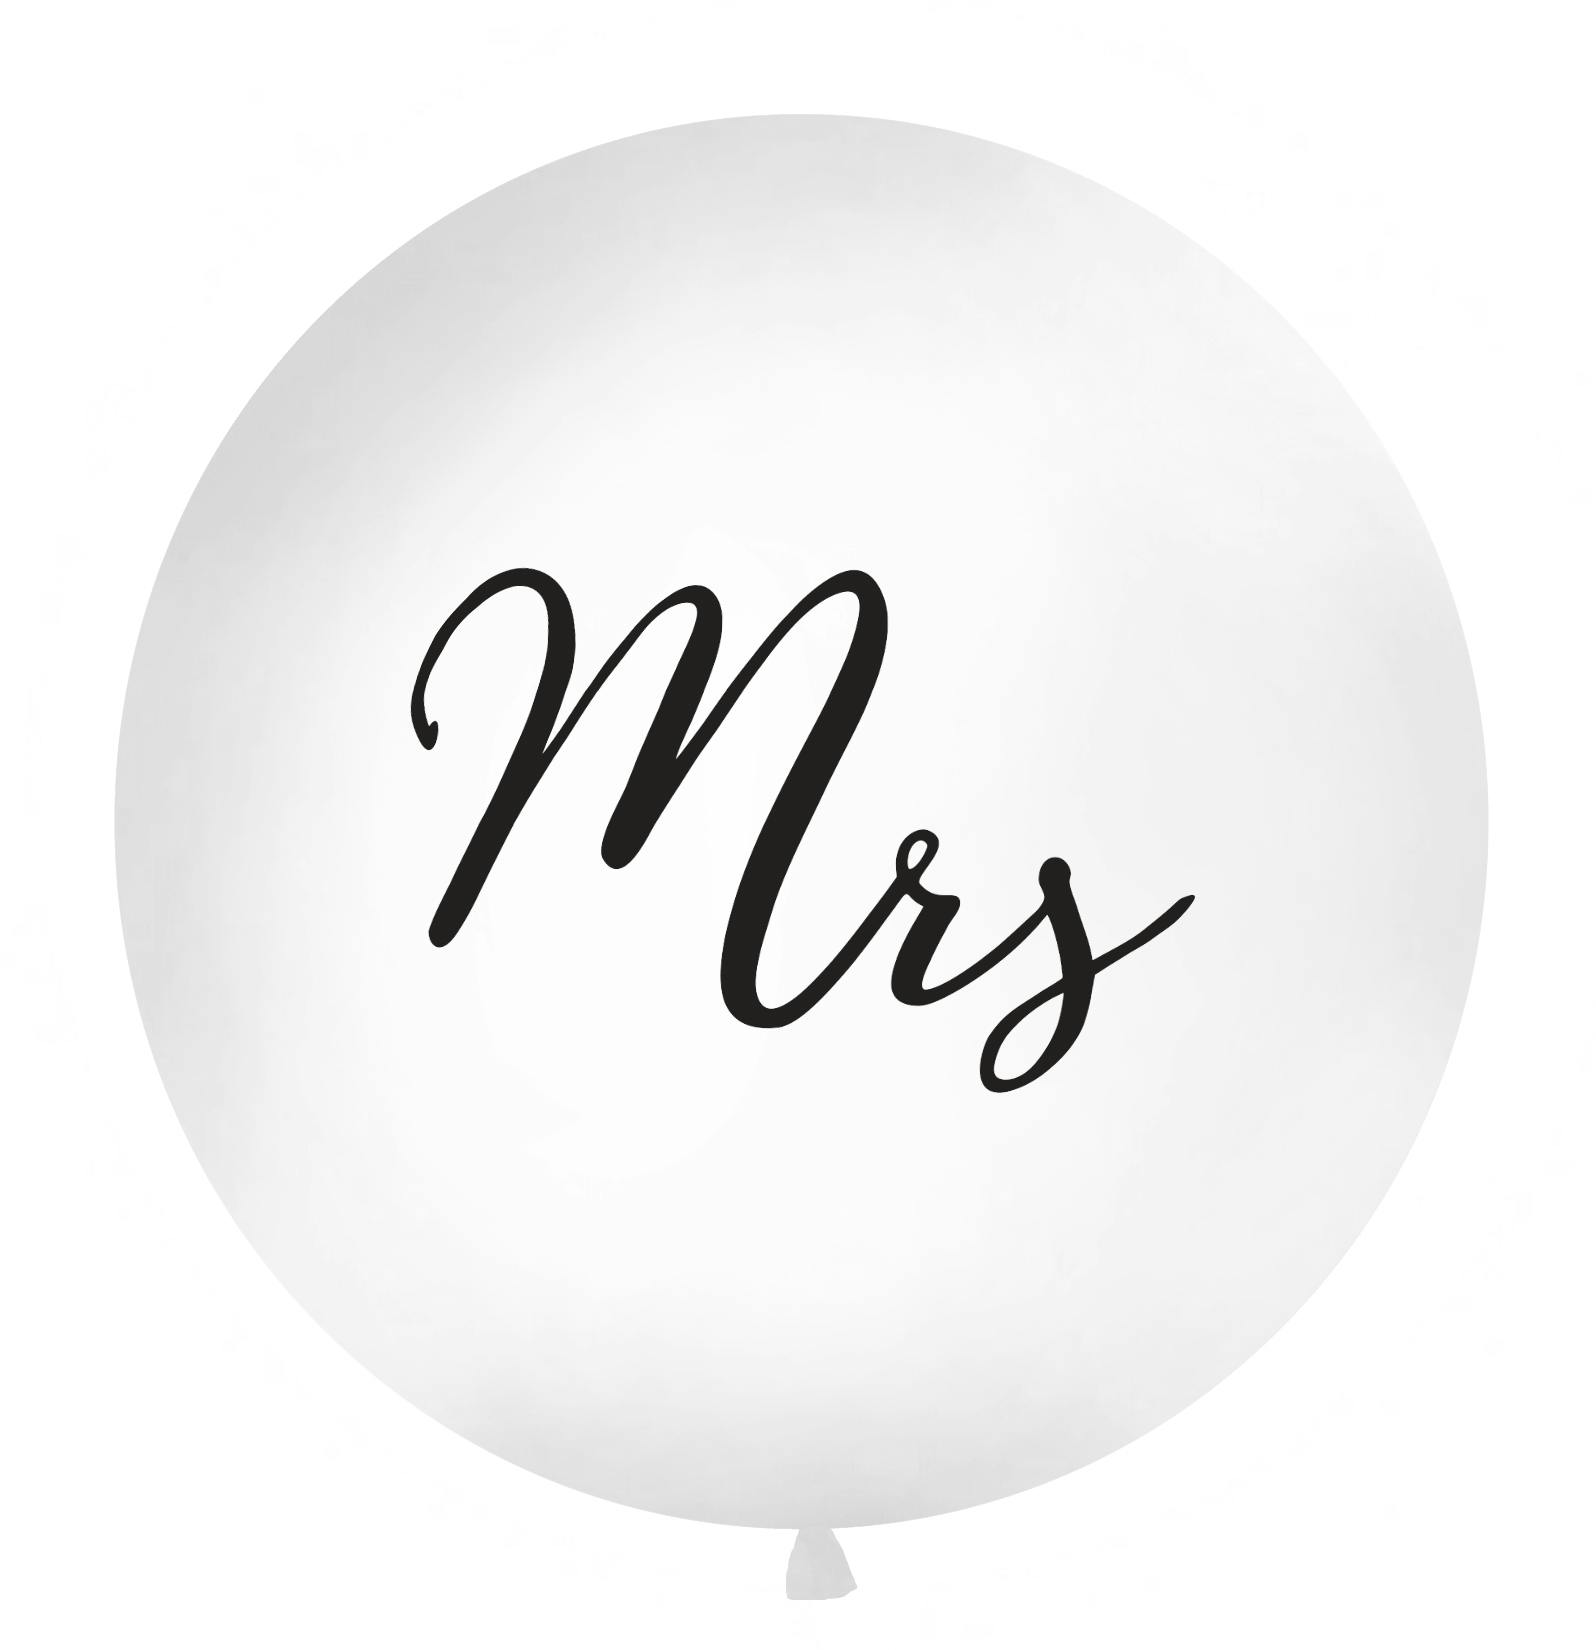 Heliumfylld Jätteballong bröllop - Mrs